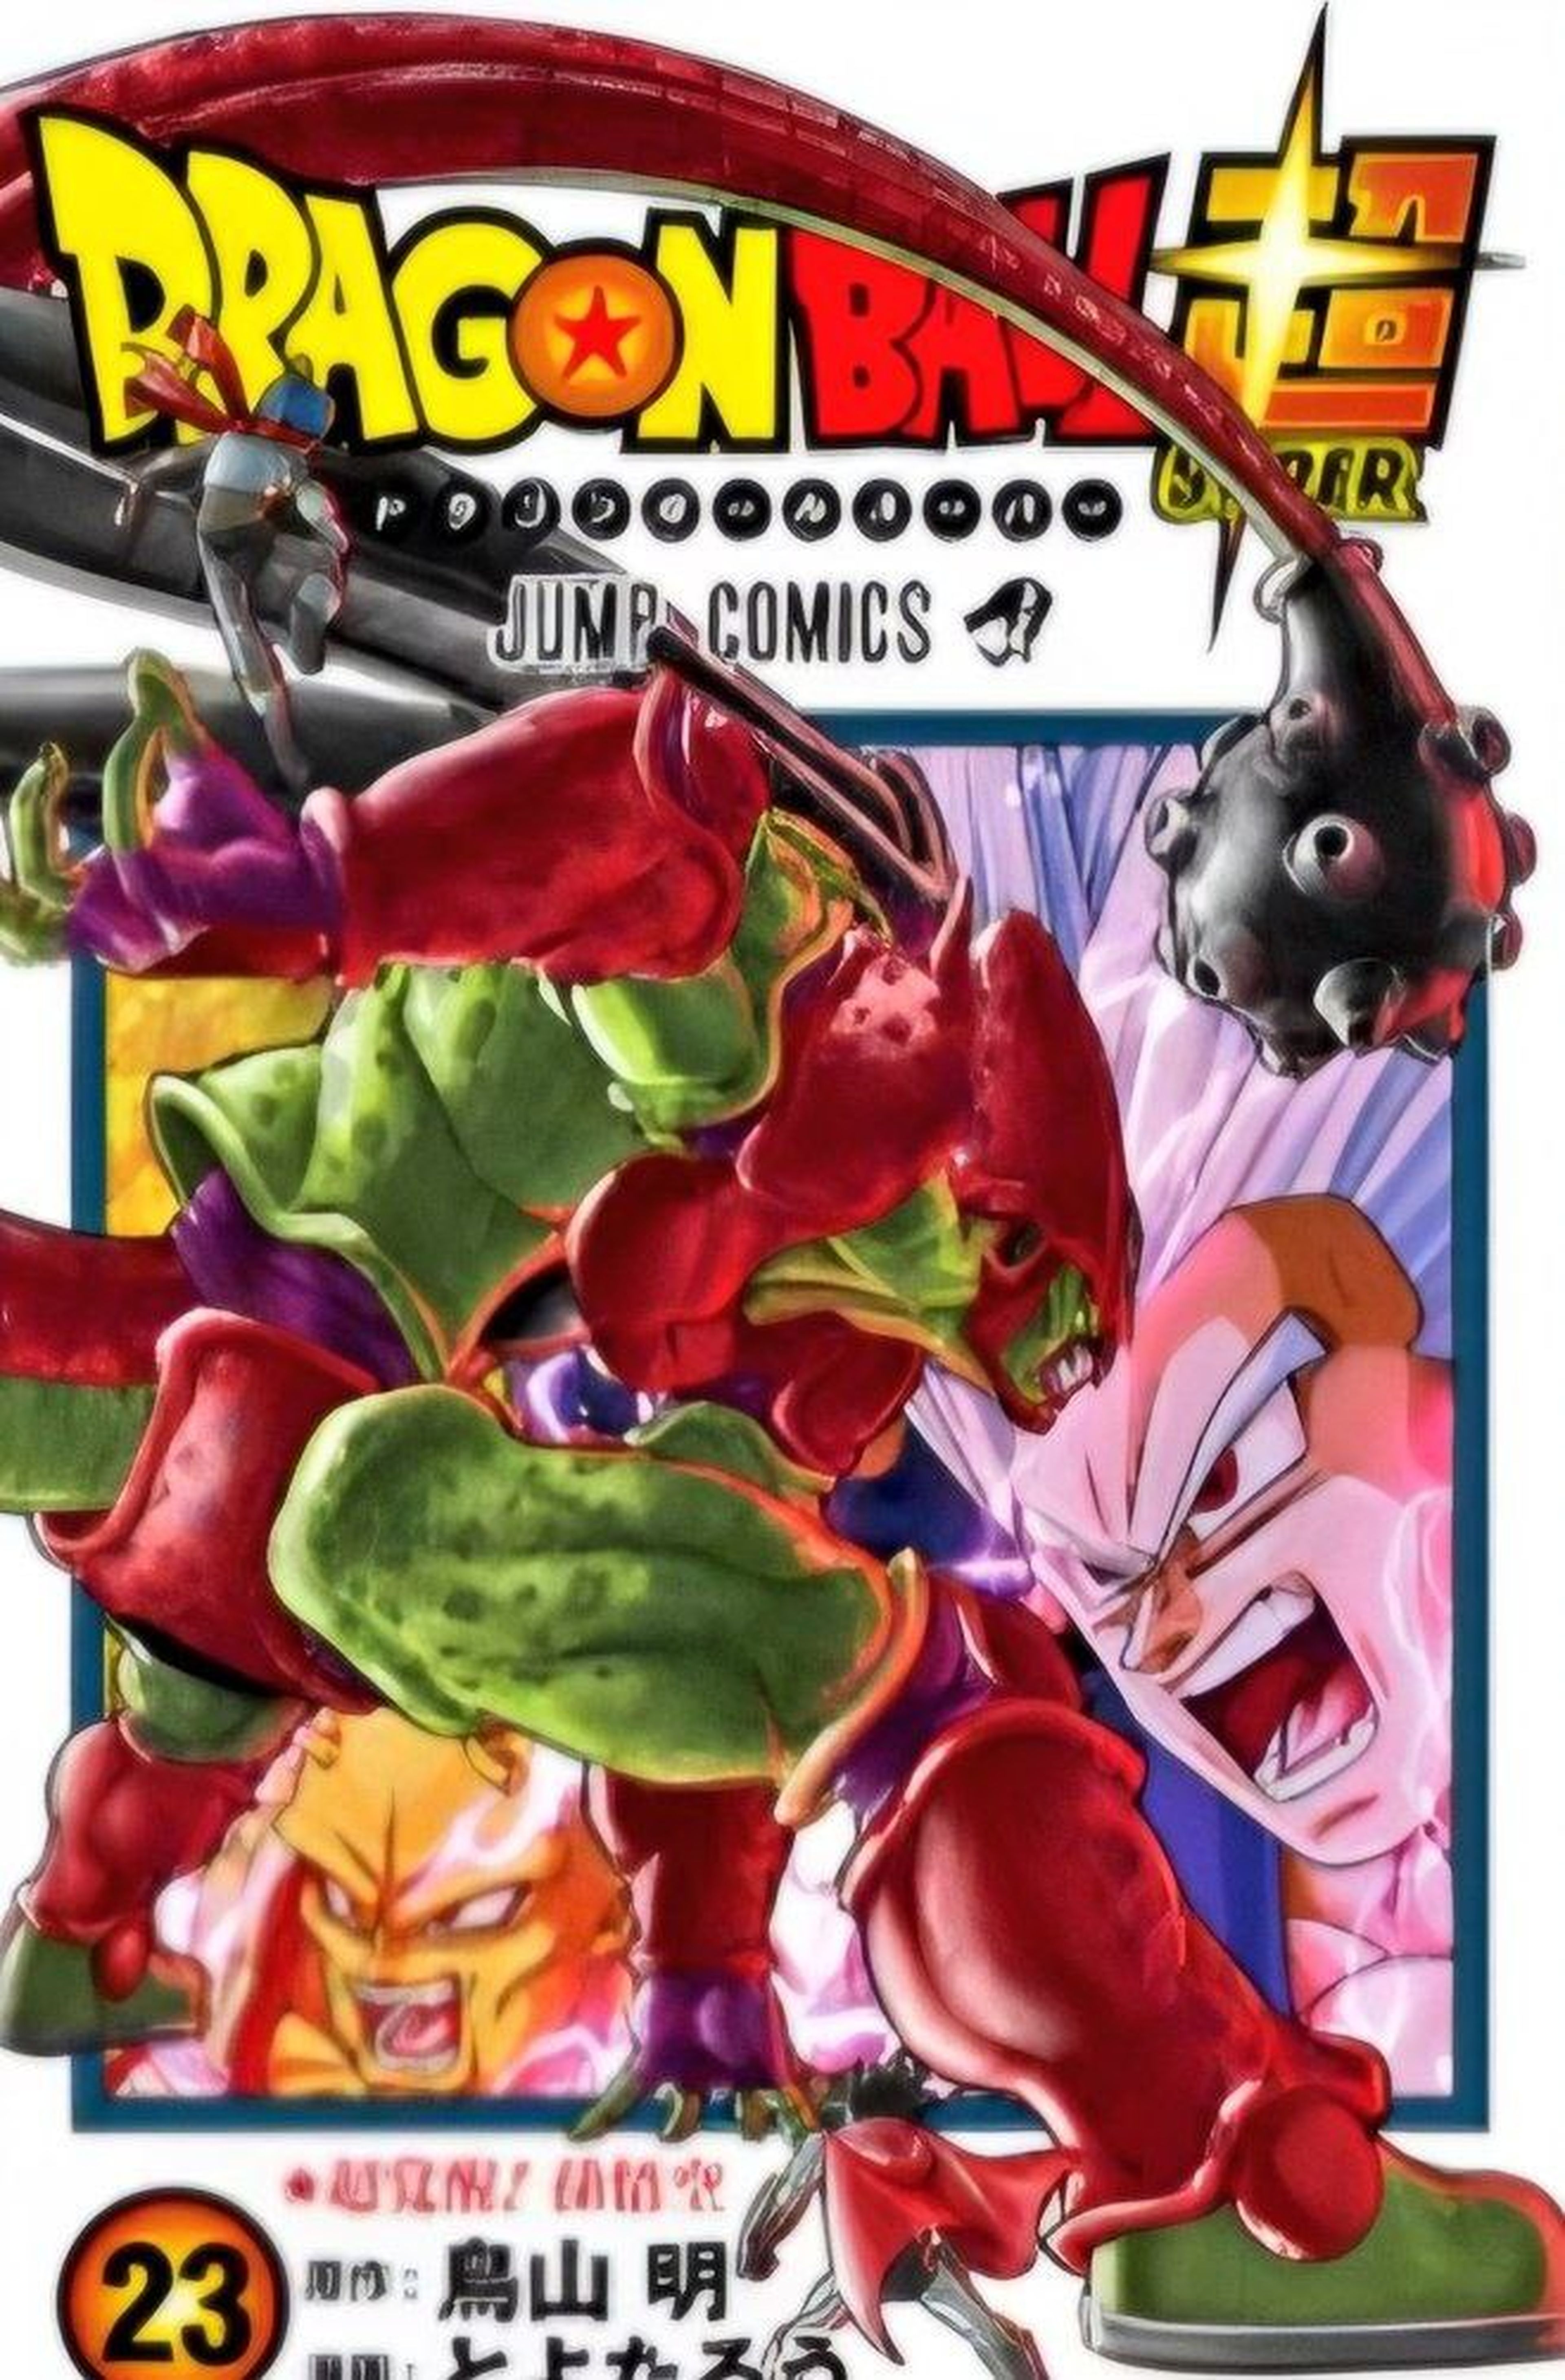 Toyotaro recicla su propio dibujo de Dragon Ball en la brutal portada del nuevo tomo manga de la serie